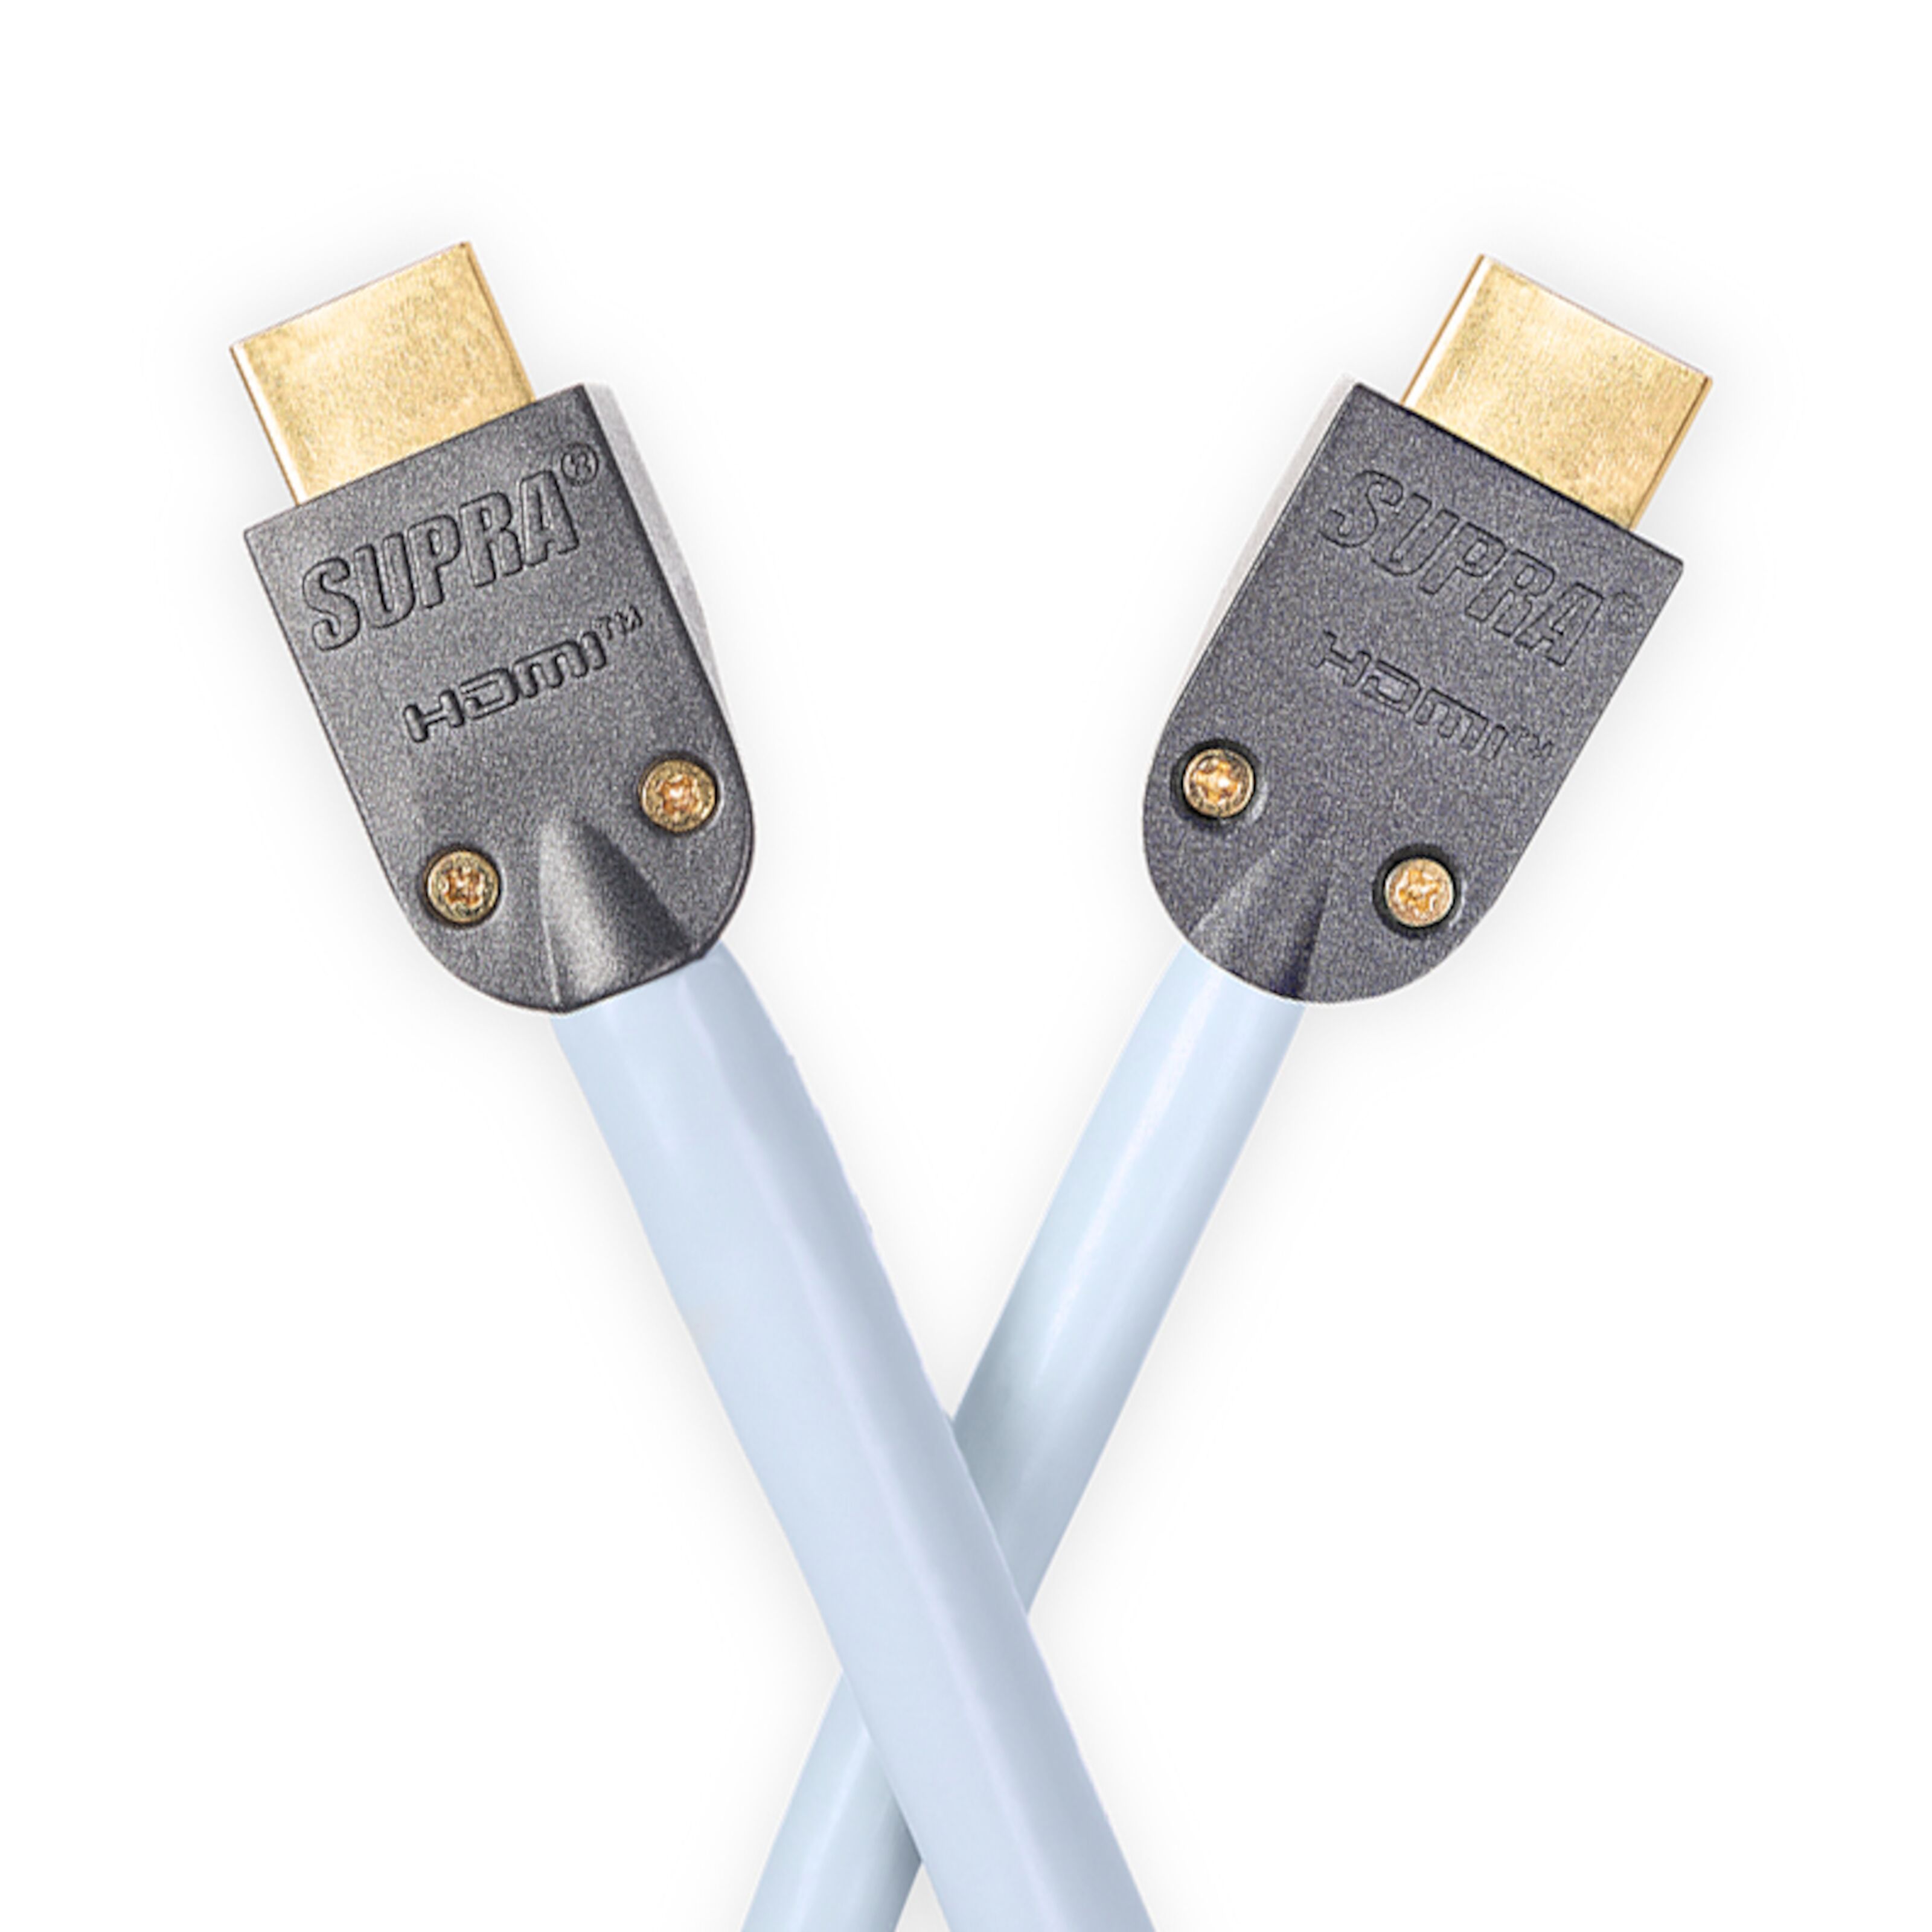 UHDTV Supra Cable HDMI Kabel  MET-S/BHigh End 2160p/4K Ultra HD Format 2 Meter 